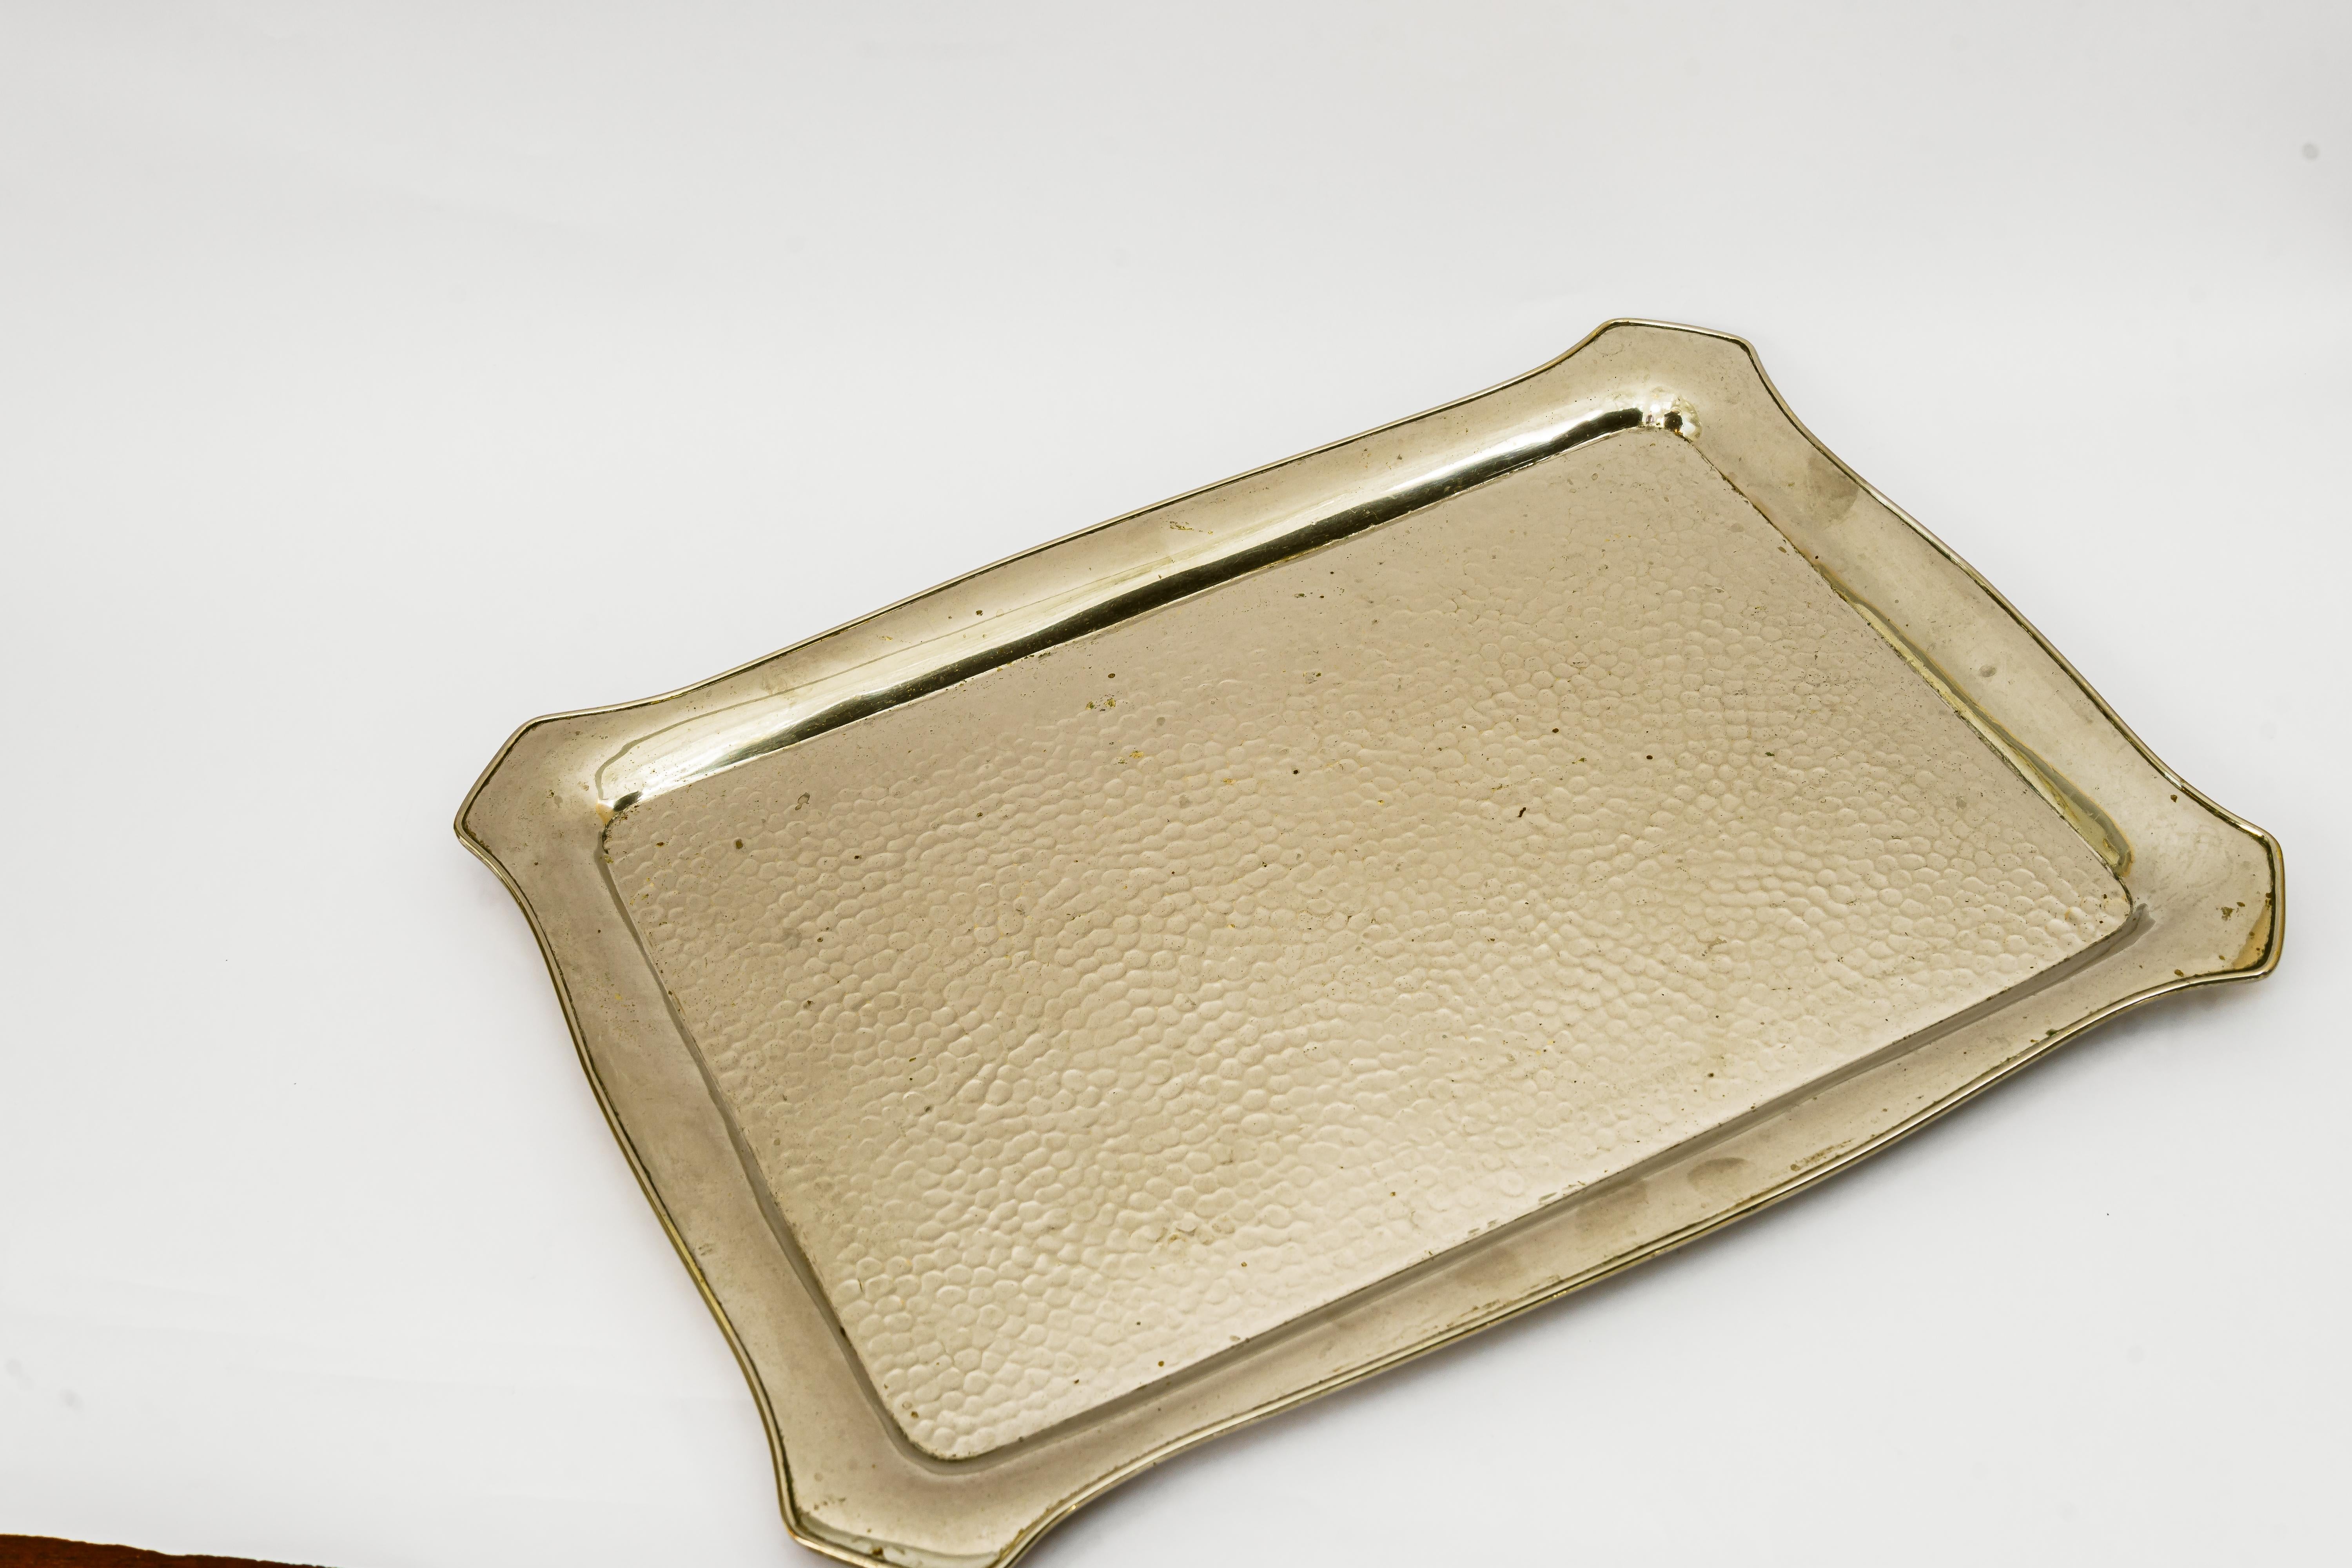 Big art deco nickel- plated serving plate Vienna around 1920s
Brass nickel-plated
Original condition.